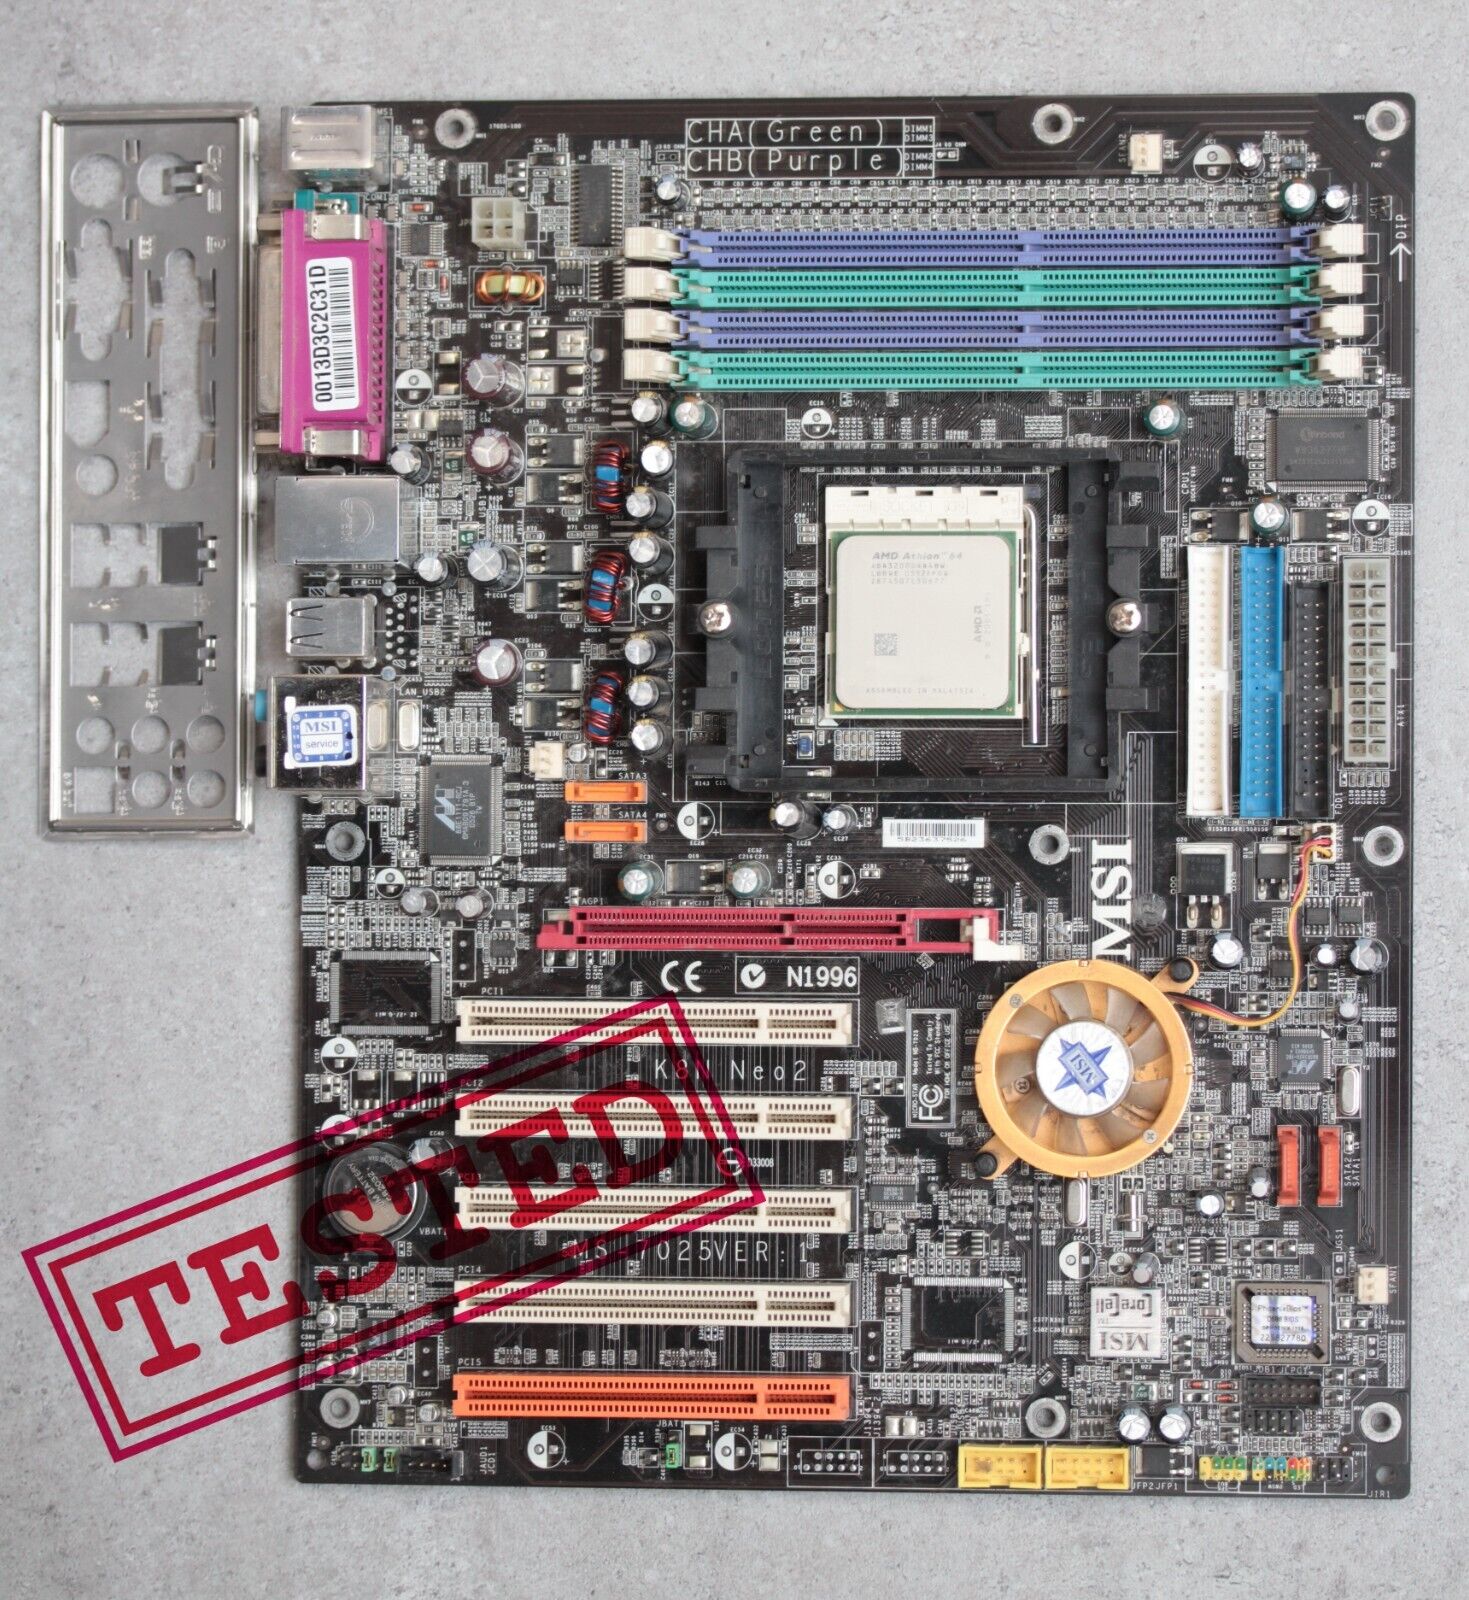 Socket 939 MSI K8N Neo2 Platinum Motherboard with CPU Athlon64 3200+& I/O shield